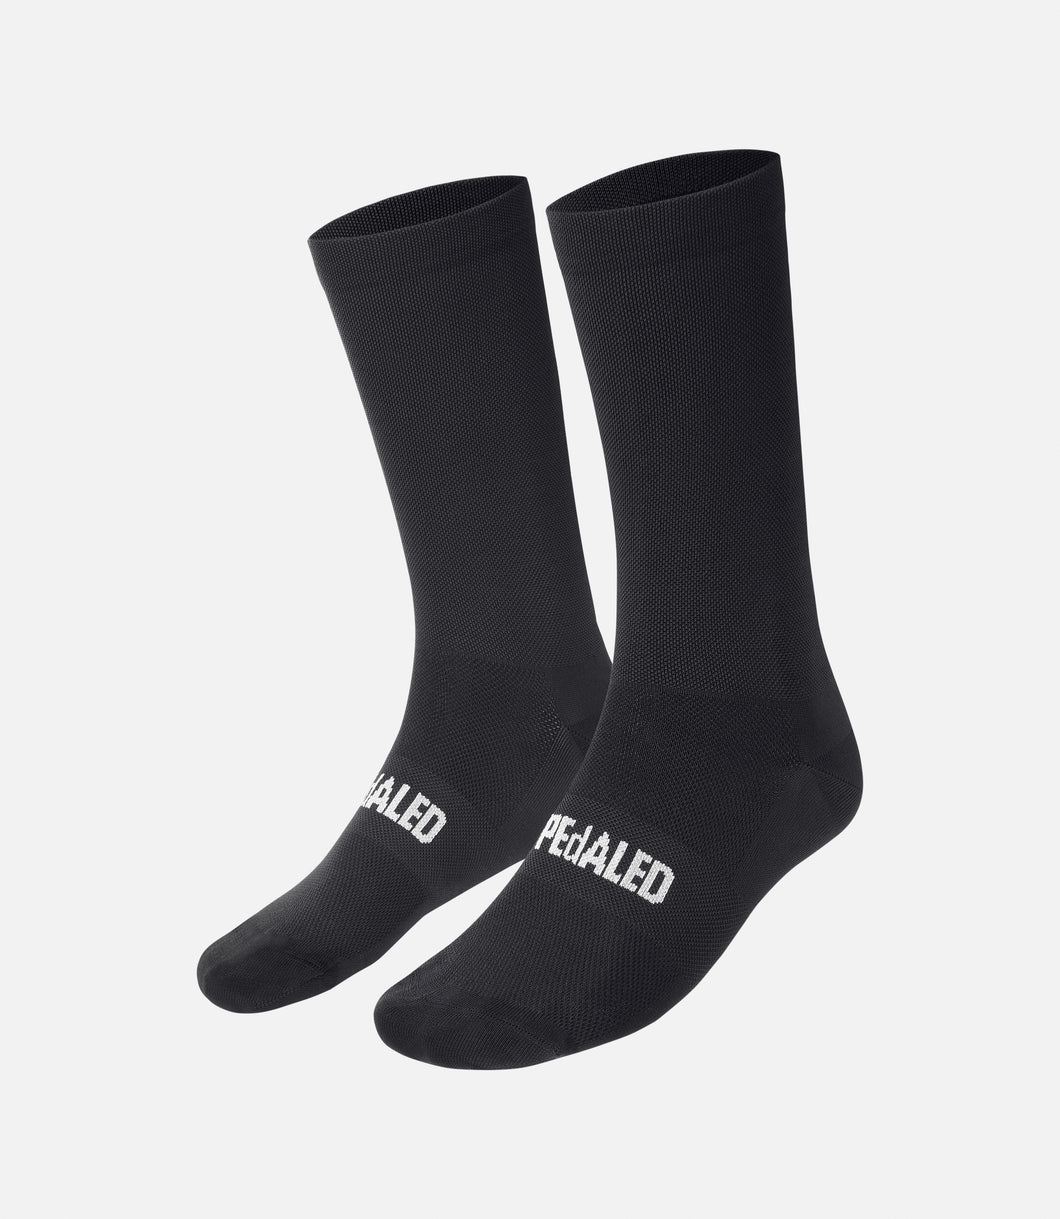 PEdALED Mirai Logo Socks - Black